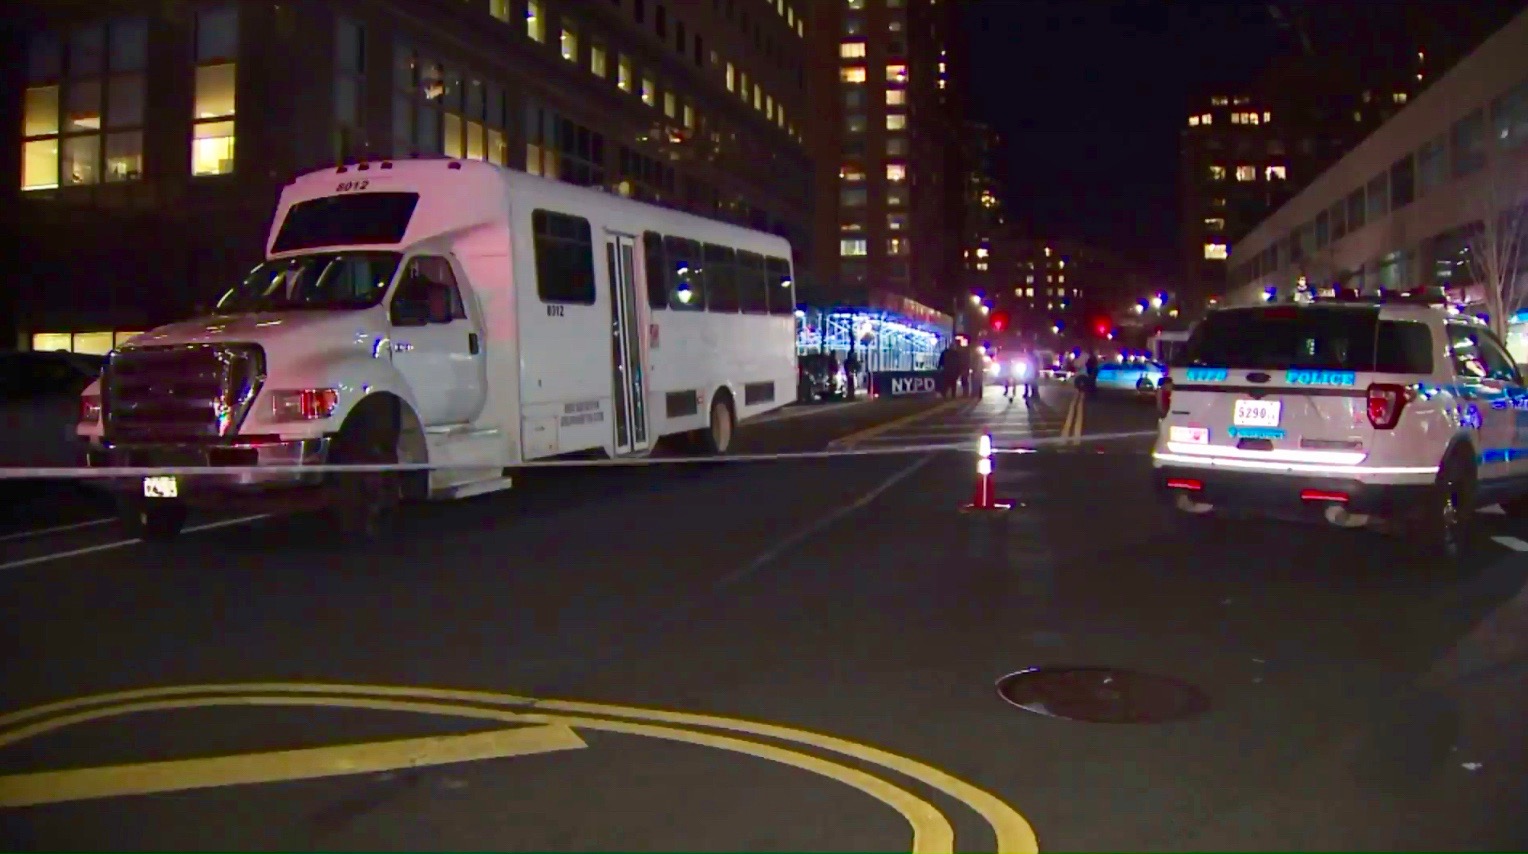 Scene where bus struck pedestrian – image from WPIX 11 footage